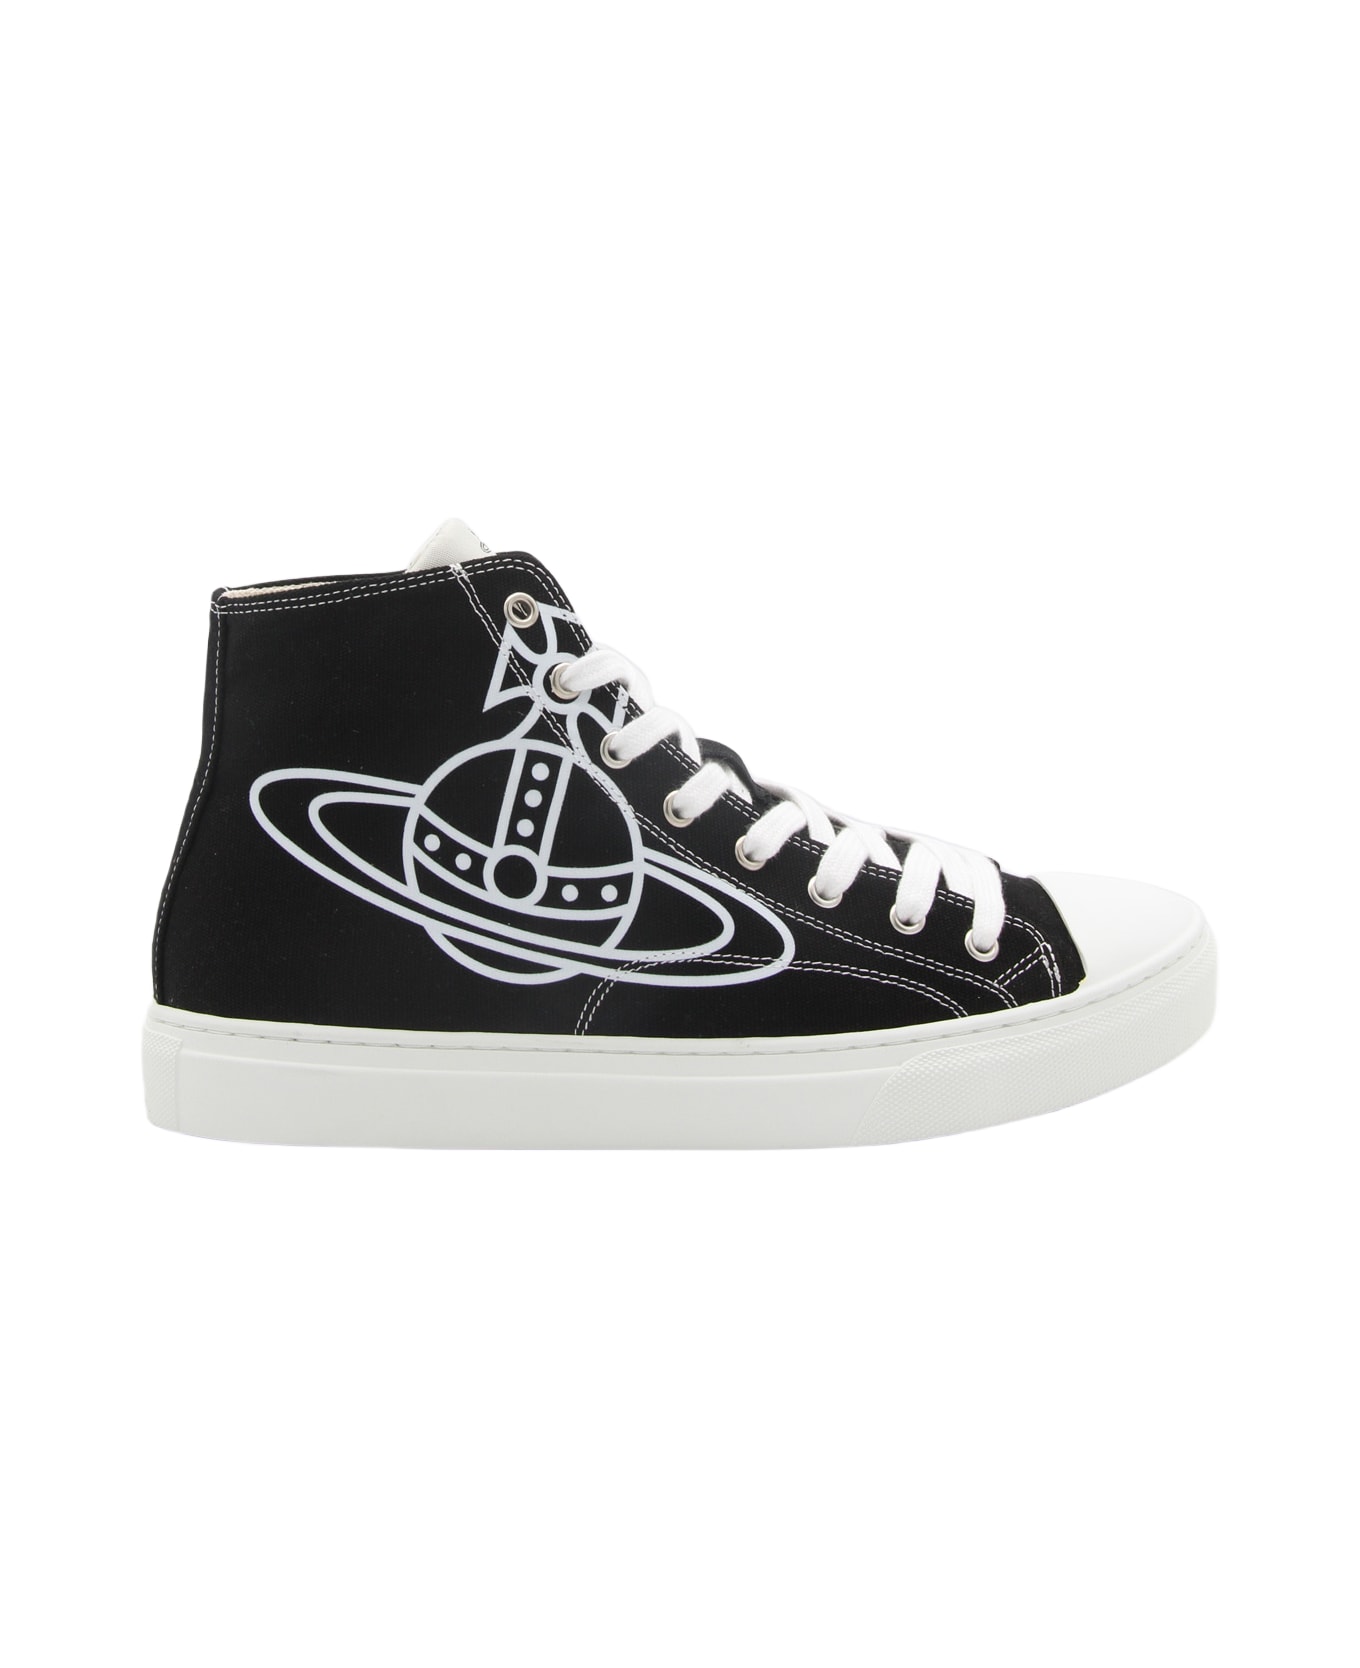 Vivienne Westwood Black And White Canvas Sneakers - Black